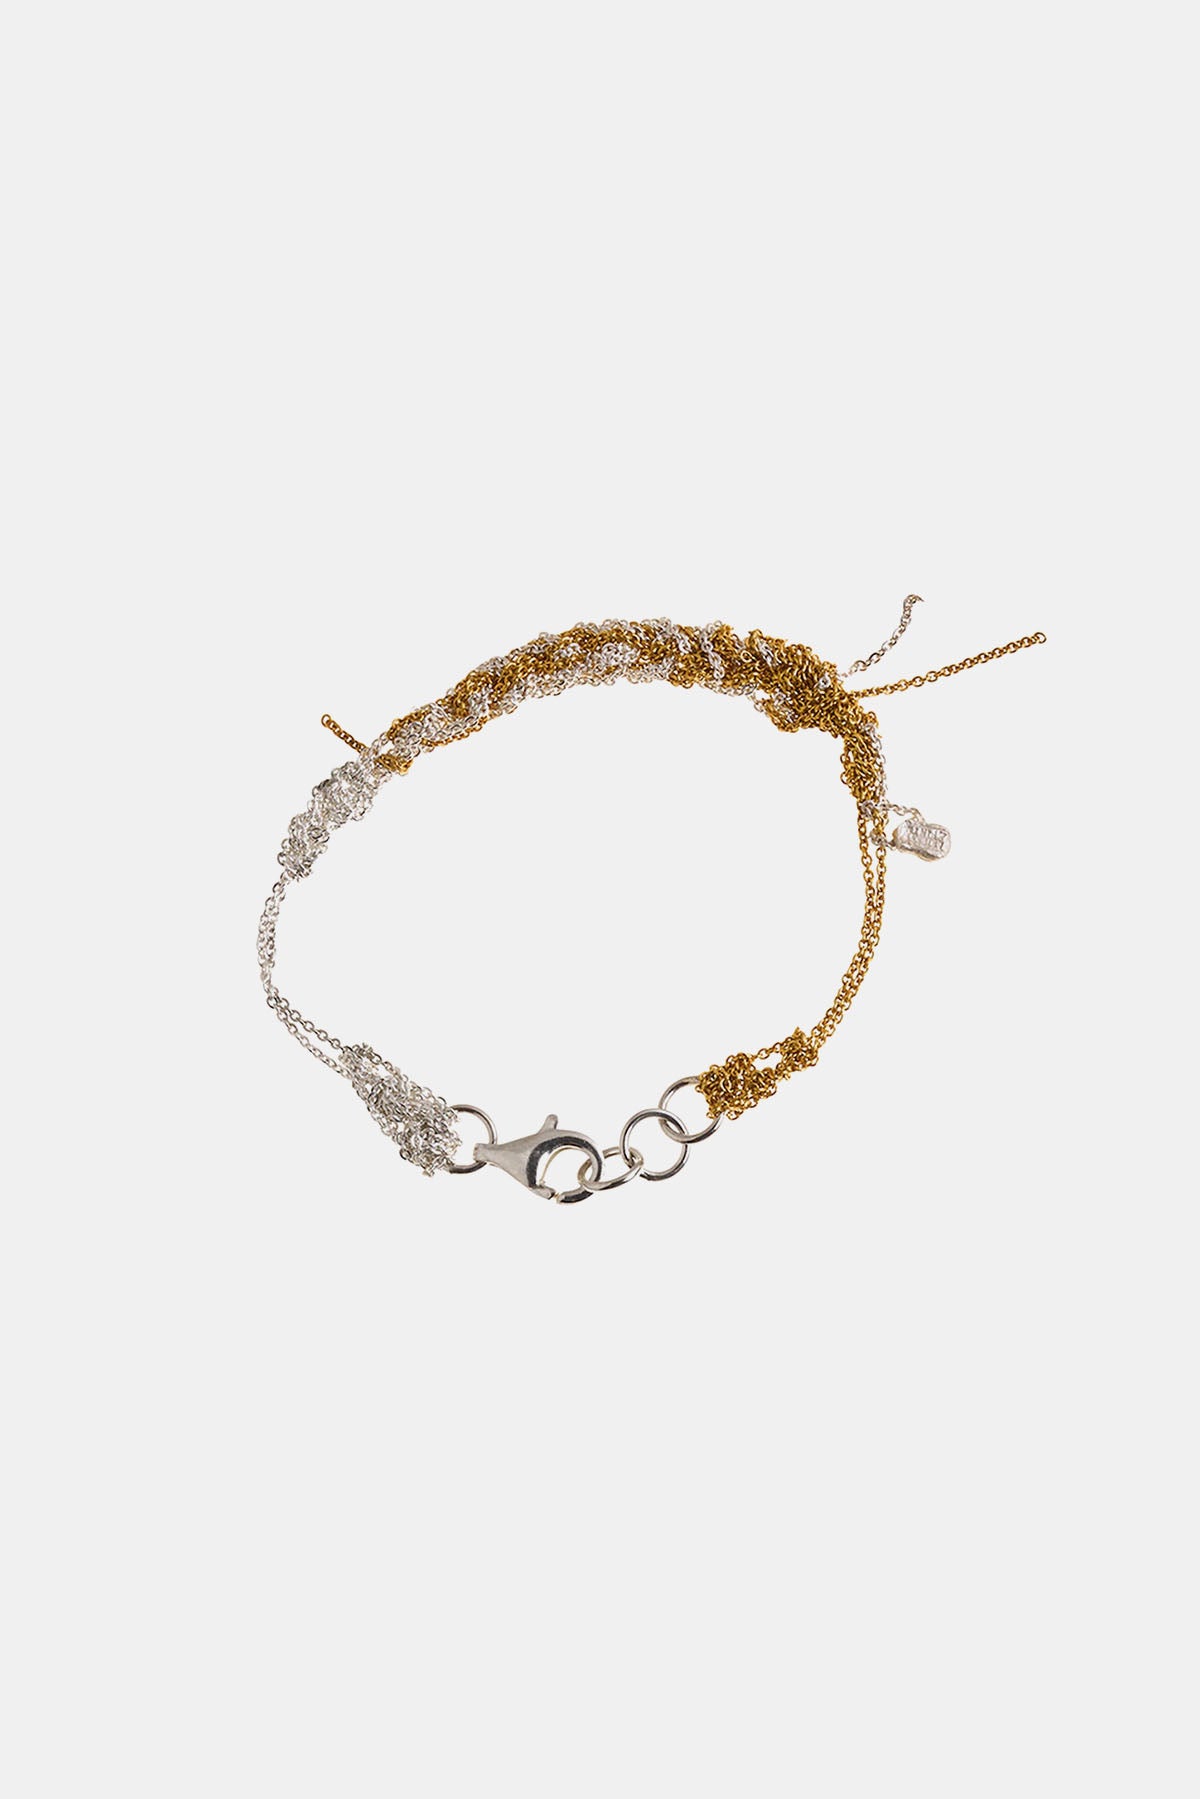 Arielle De Pinto 2-Tone Bare Chain Bracelet in Silver and Gold